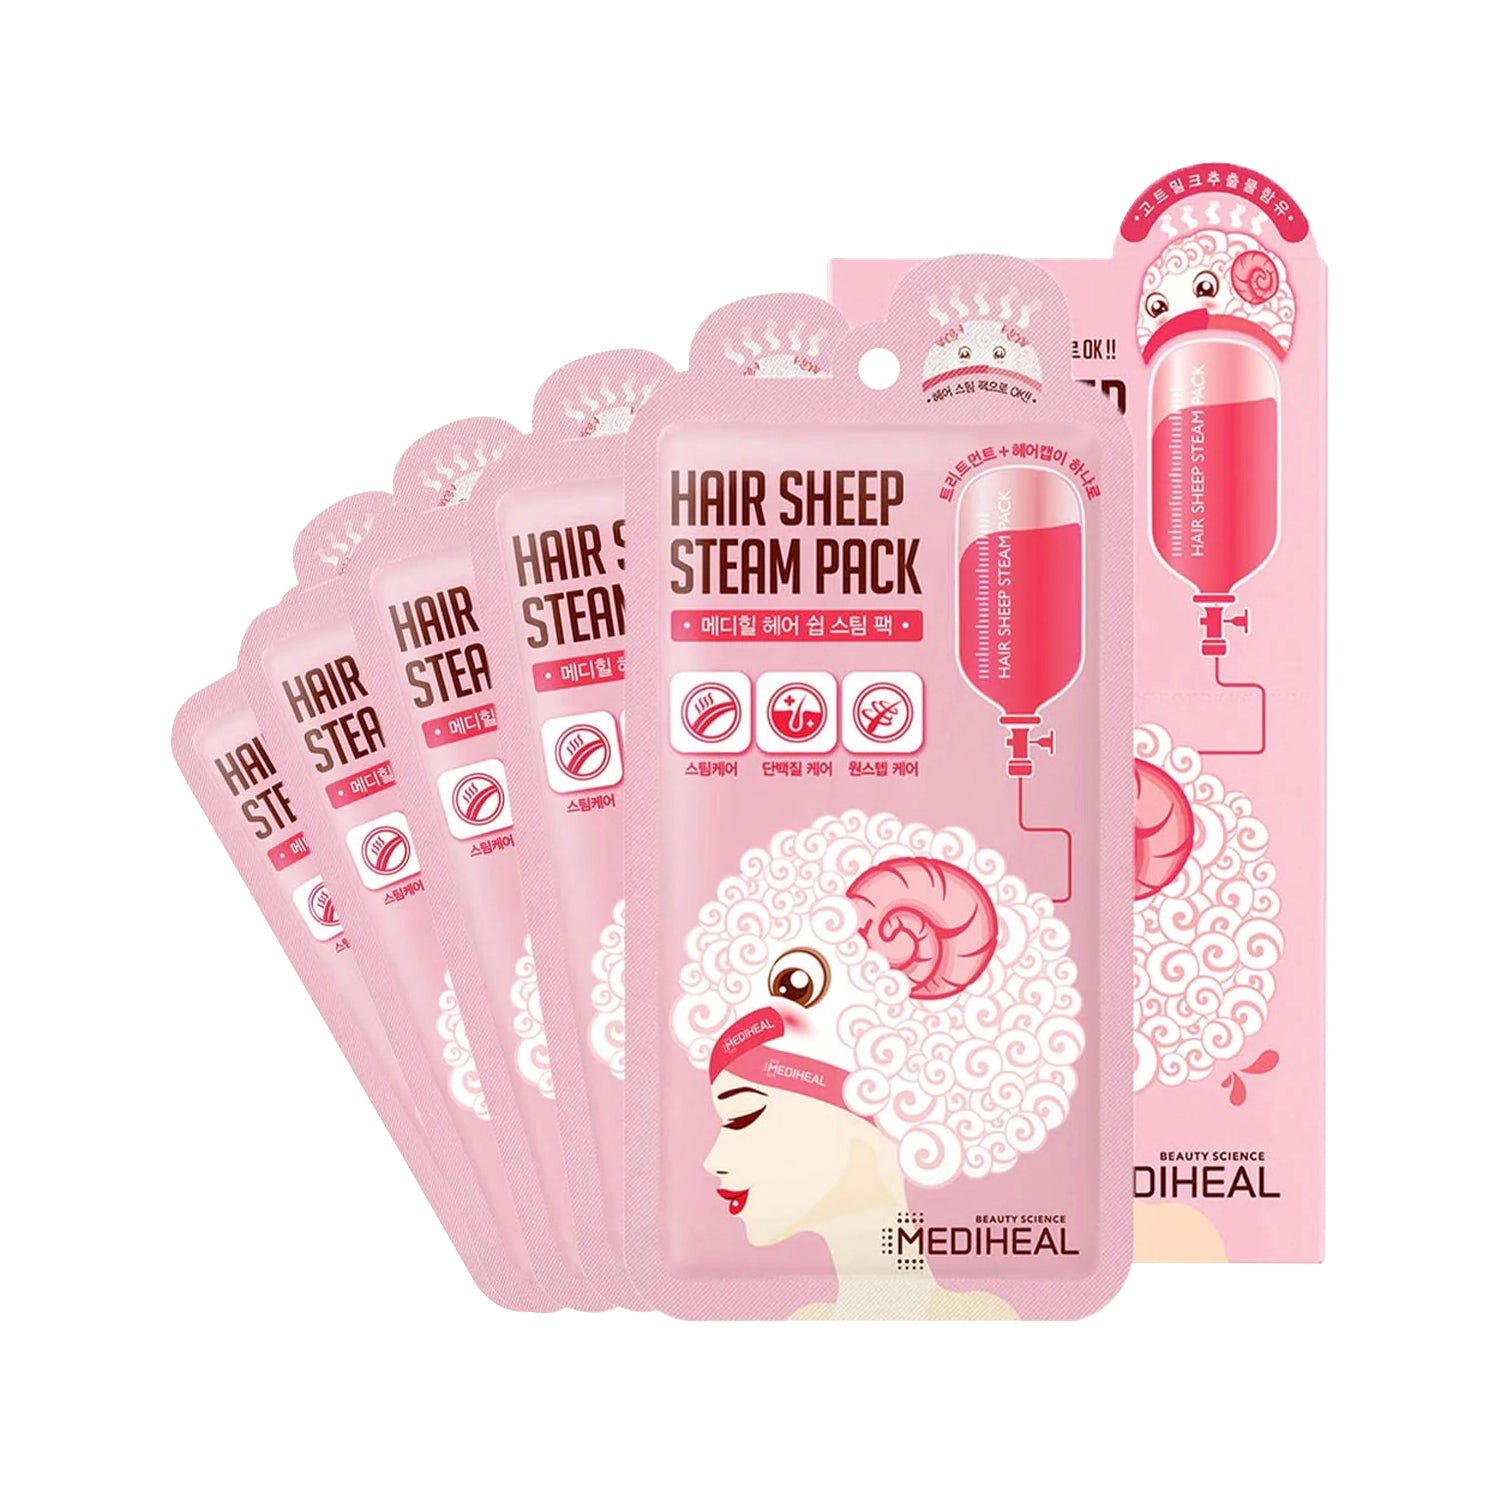 Mediheal Hair Sheep Steam Pack Hair Care Mediheal Box (5 Sheets)  